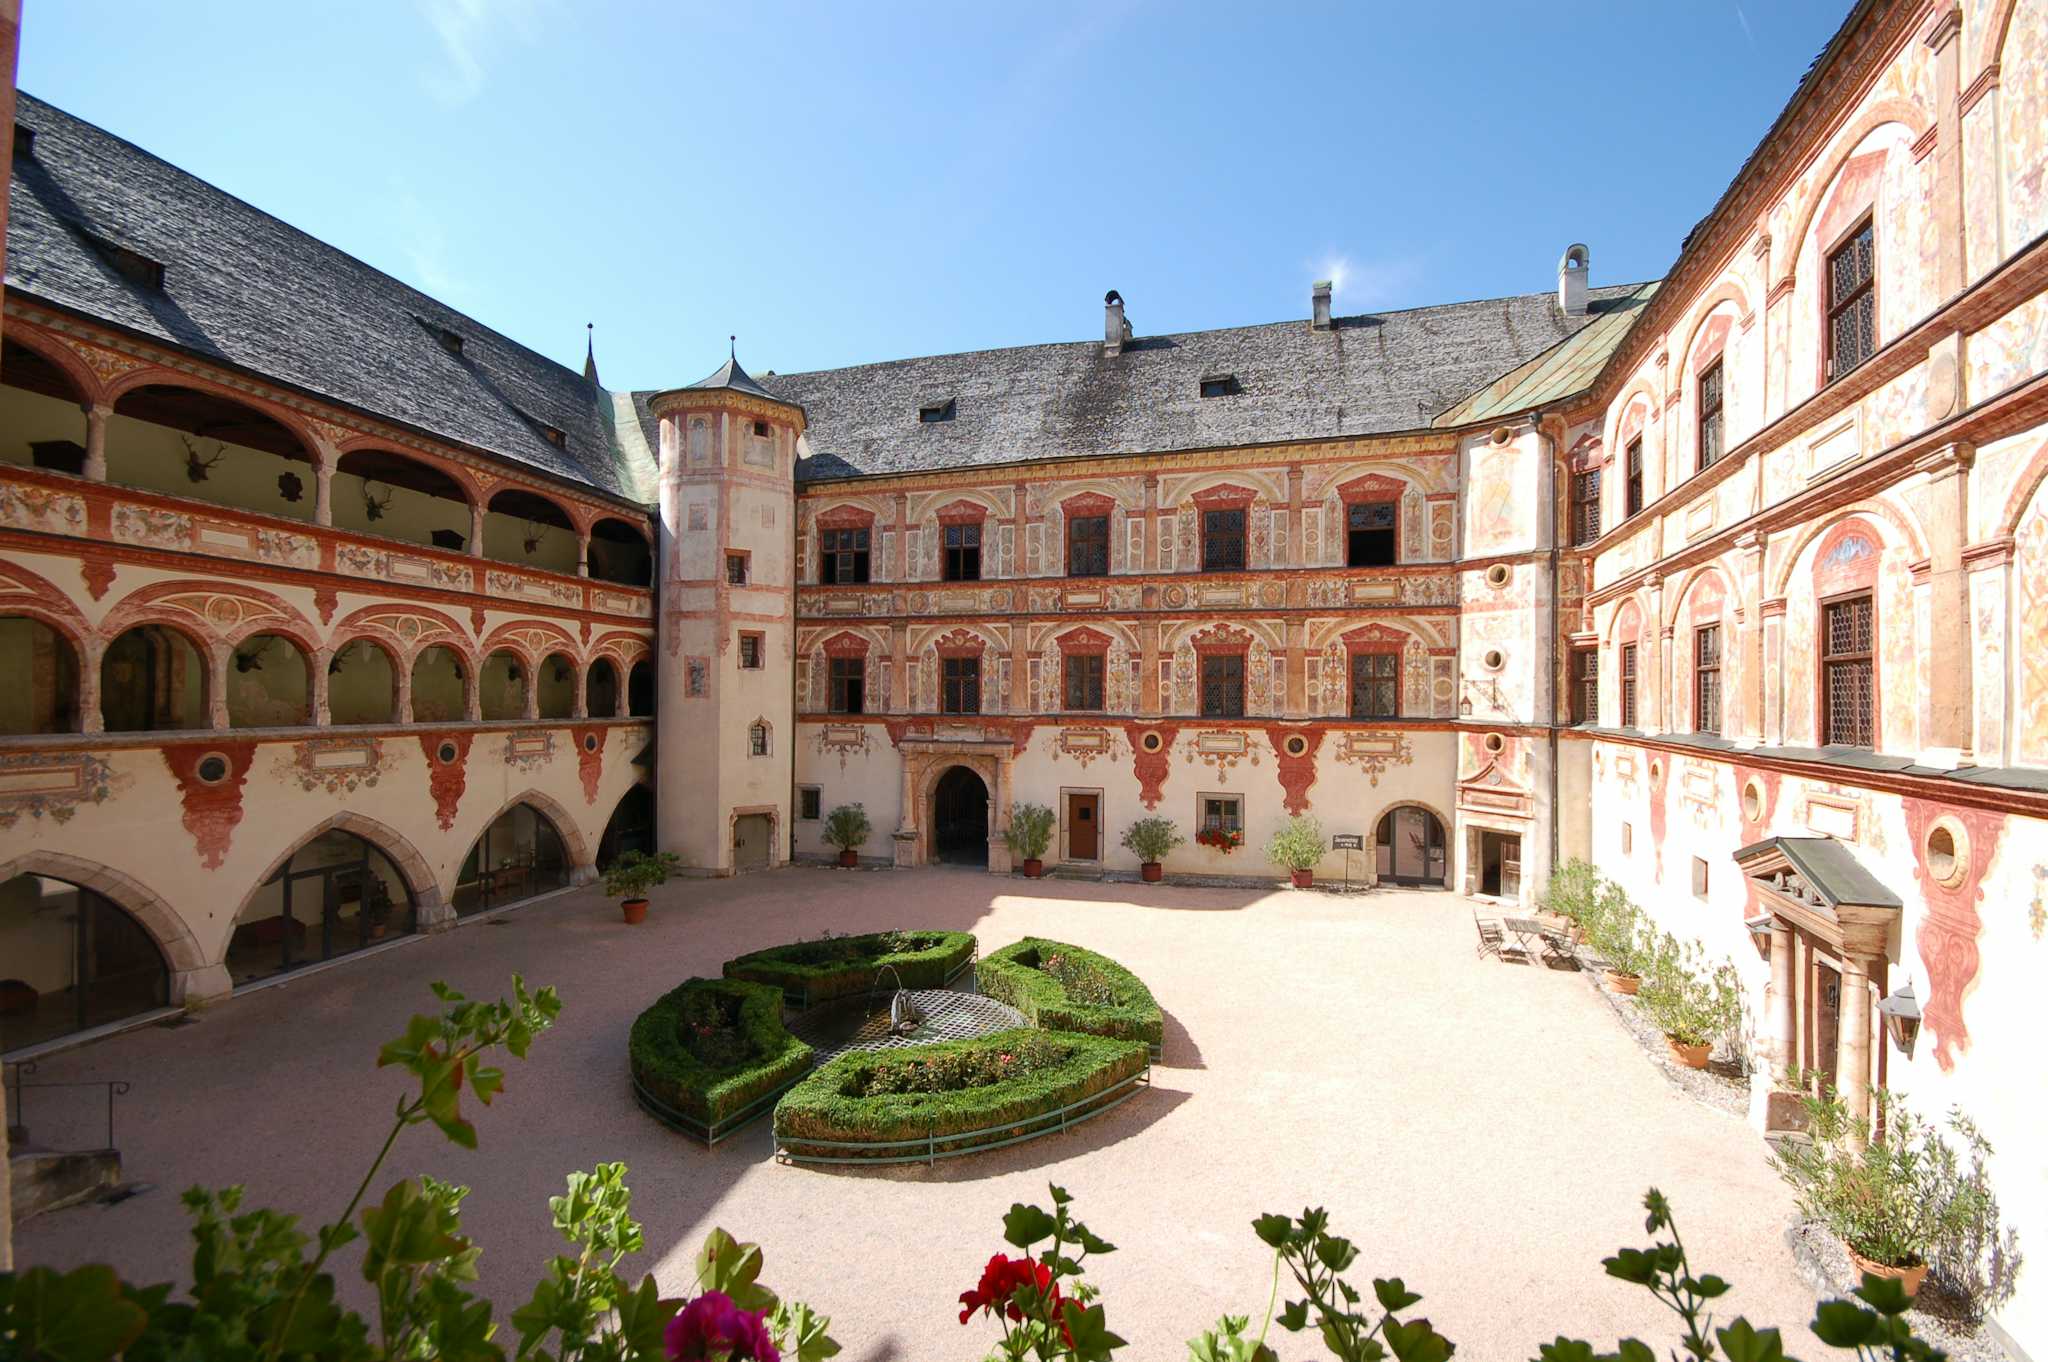 Tratzberg chateau